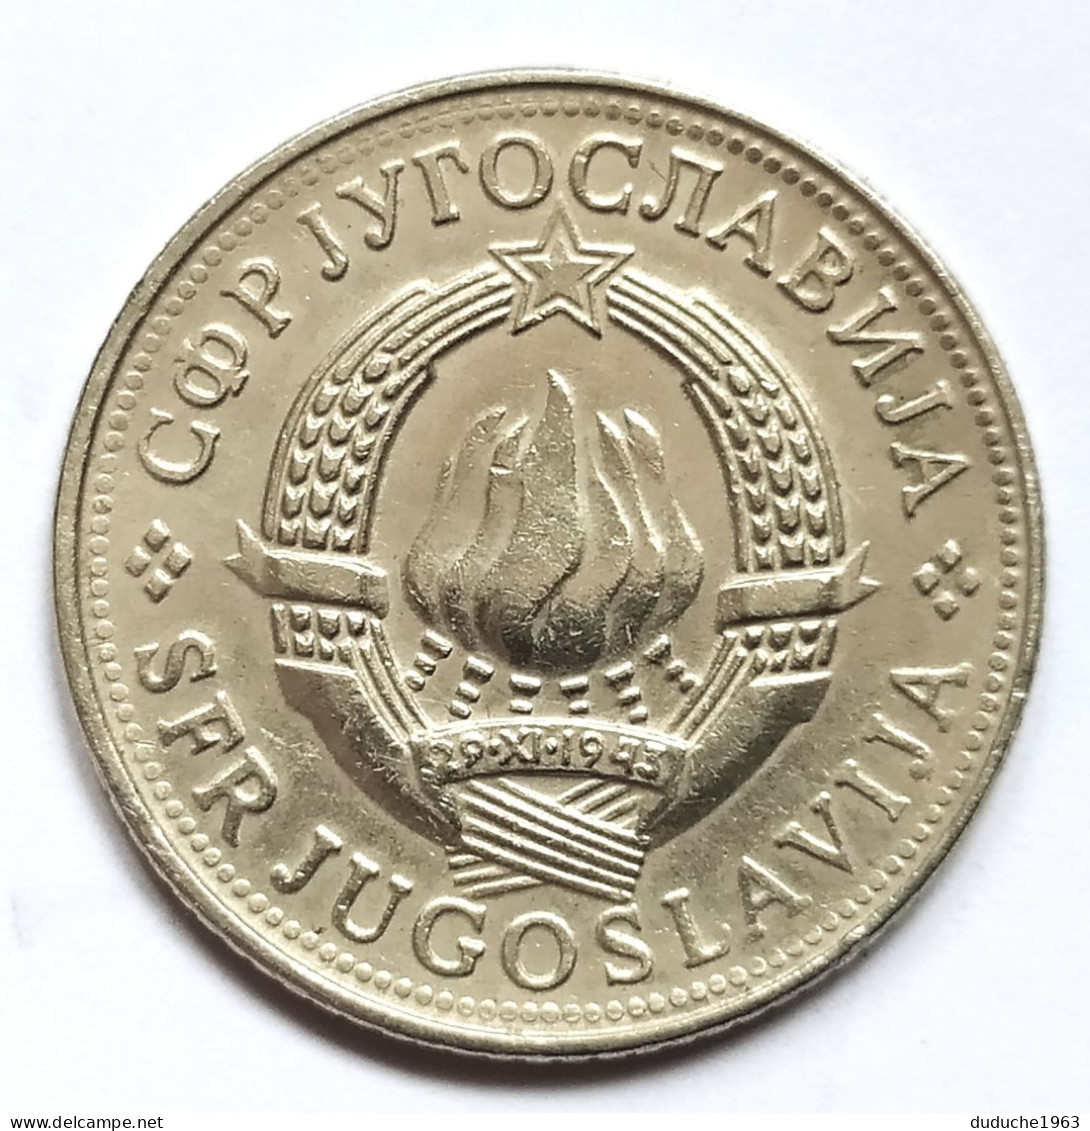 Yougoslavie - 5 Dinar 1981 - Jugoslawien